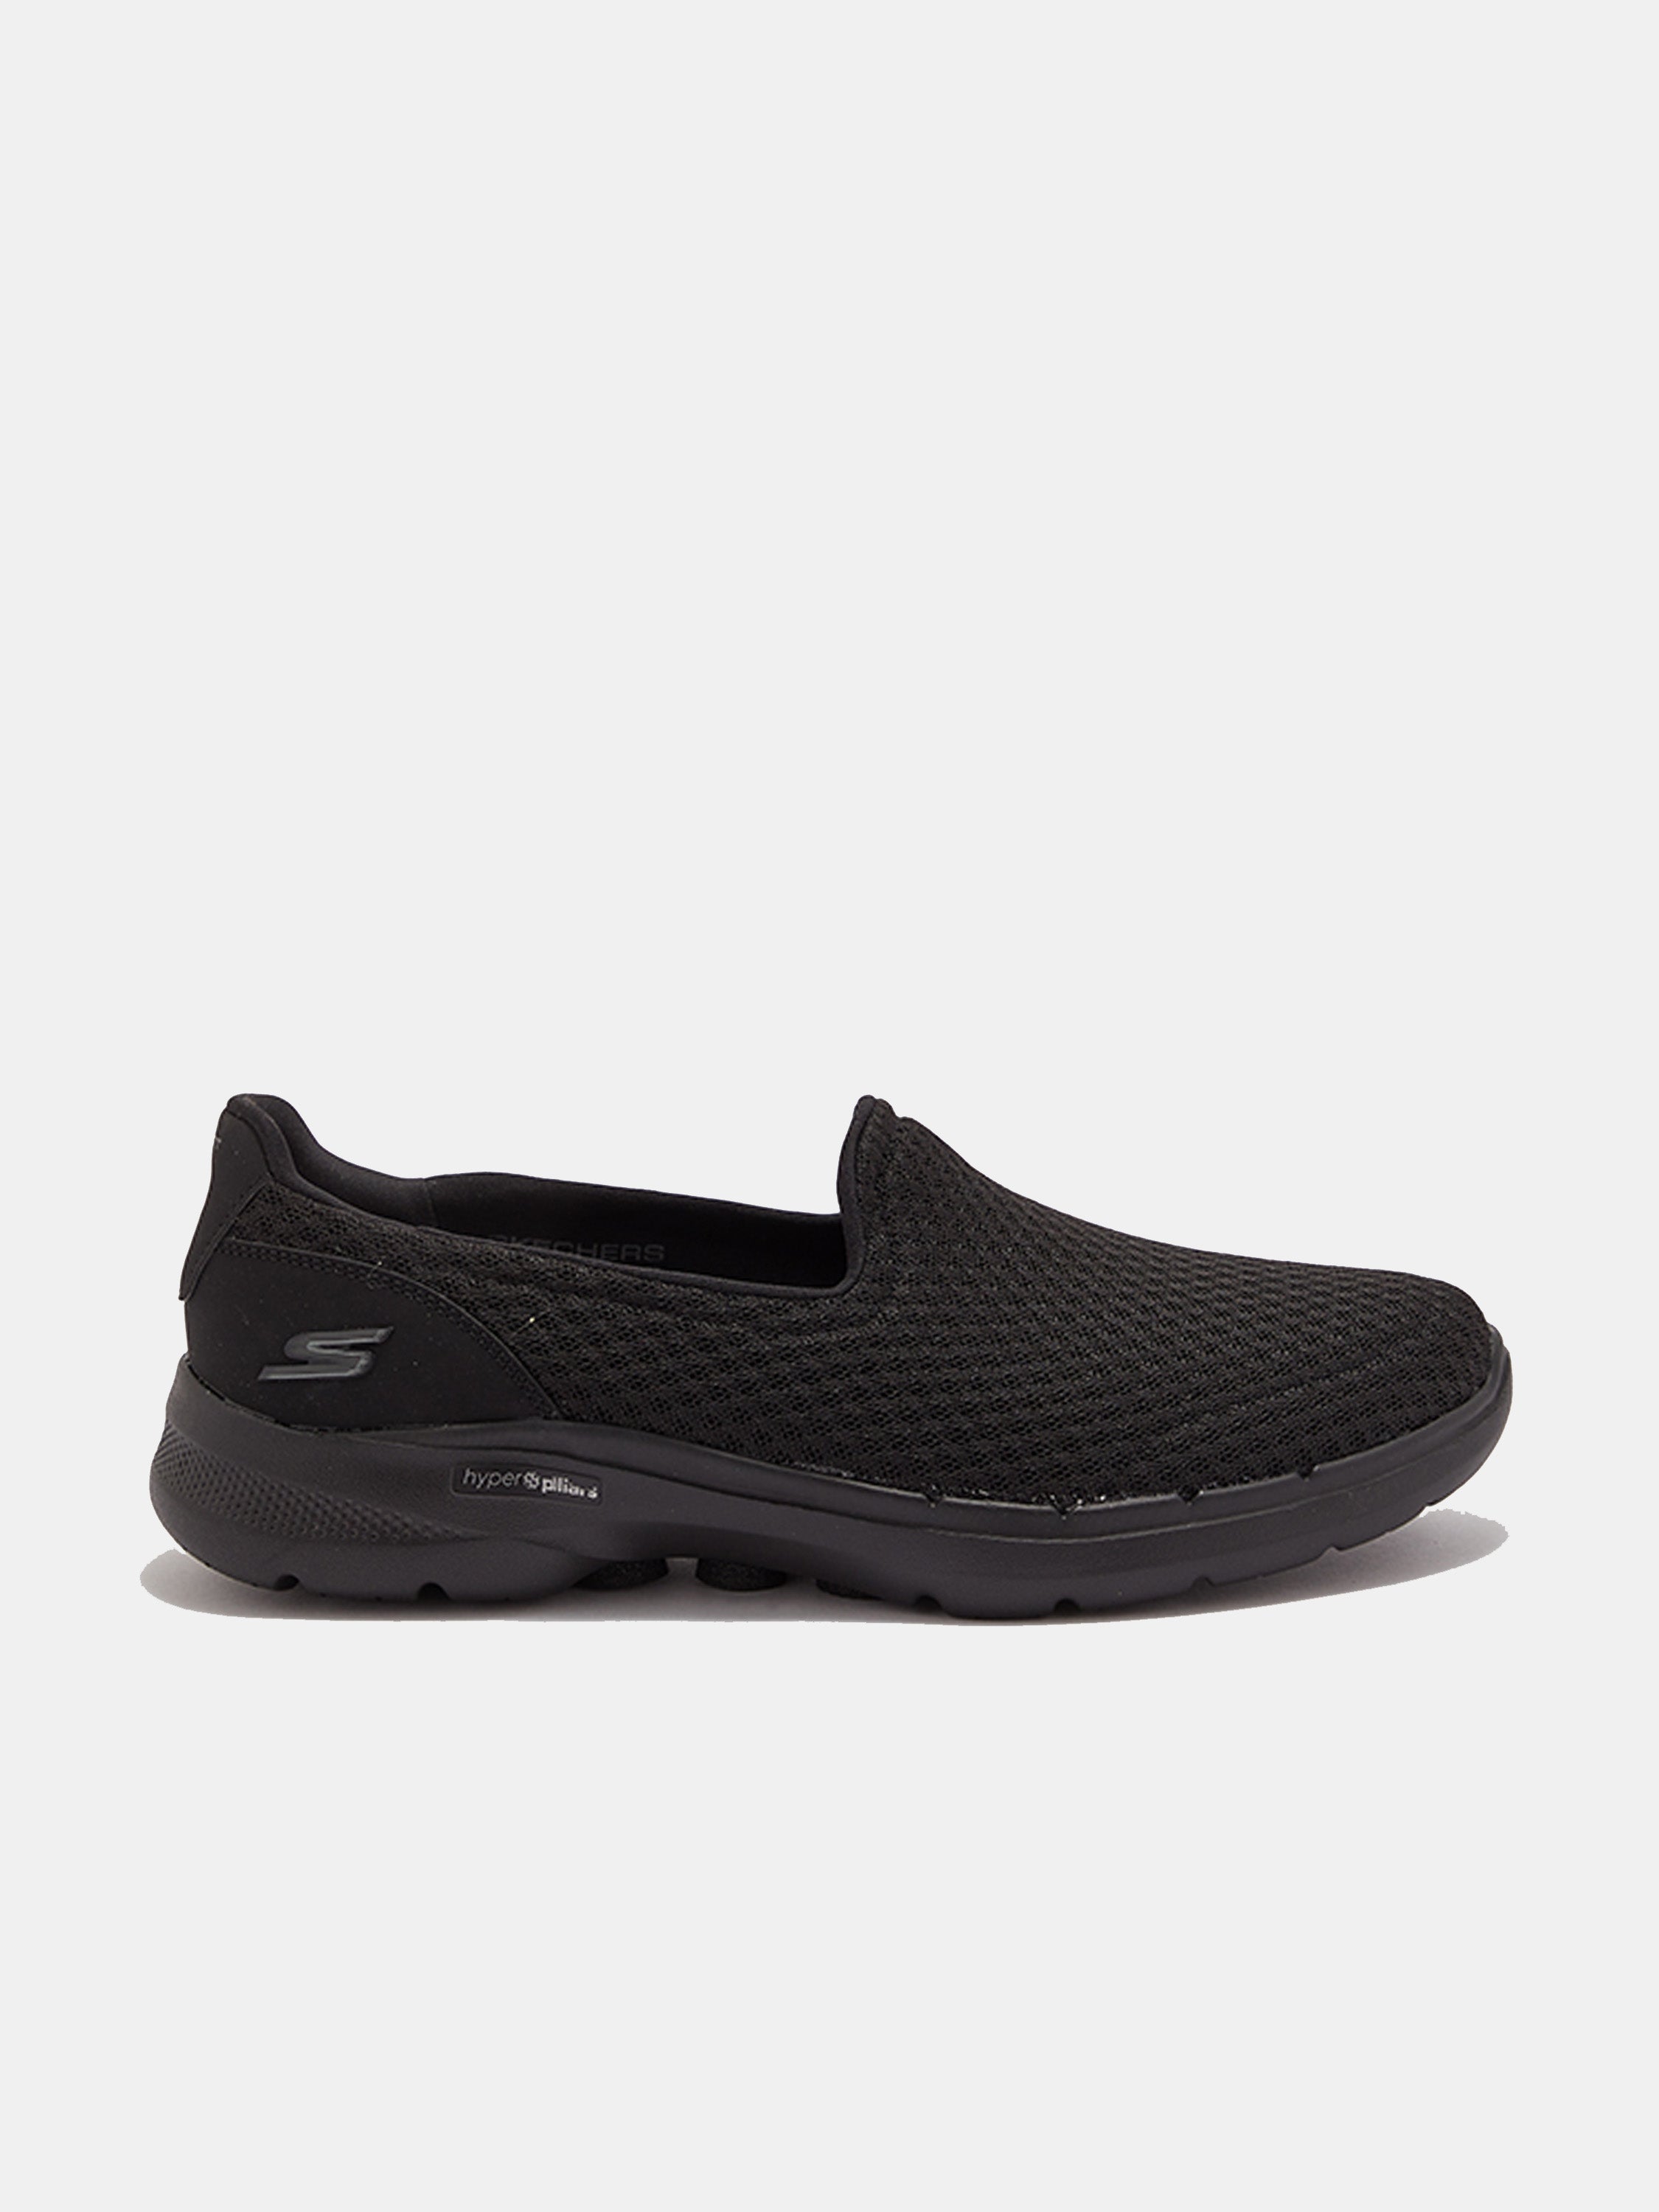 Skechers Shoes | lupon.gov.ph